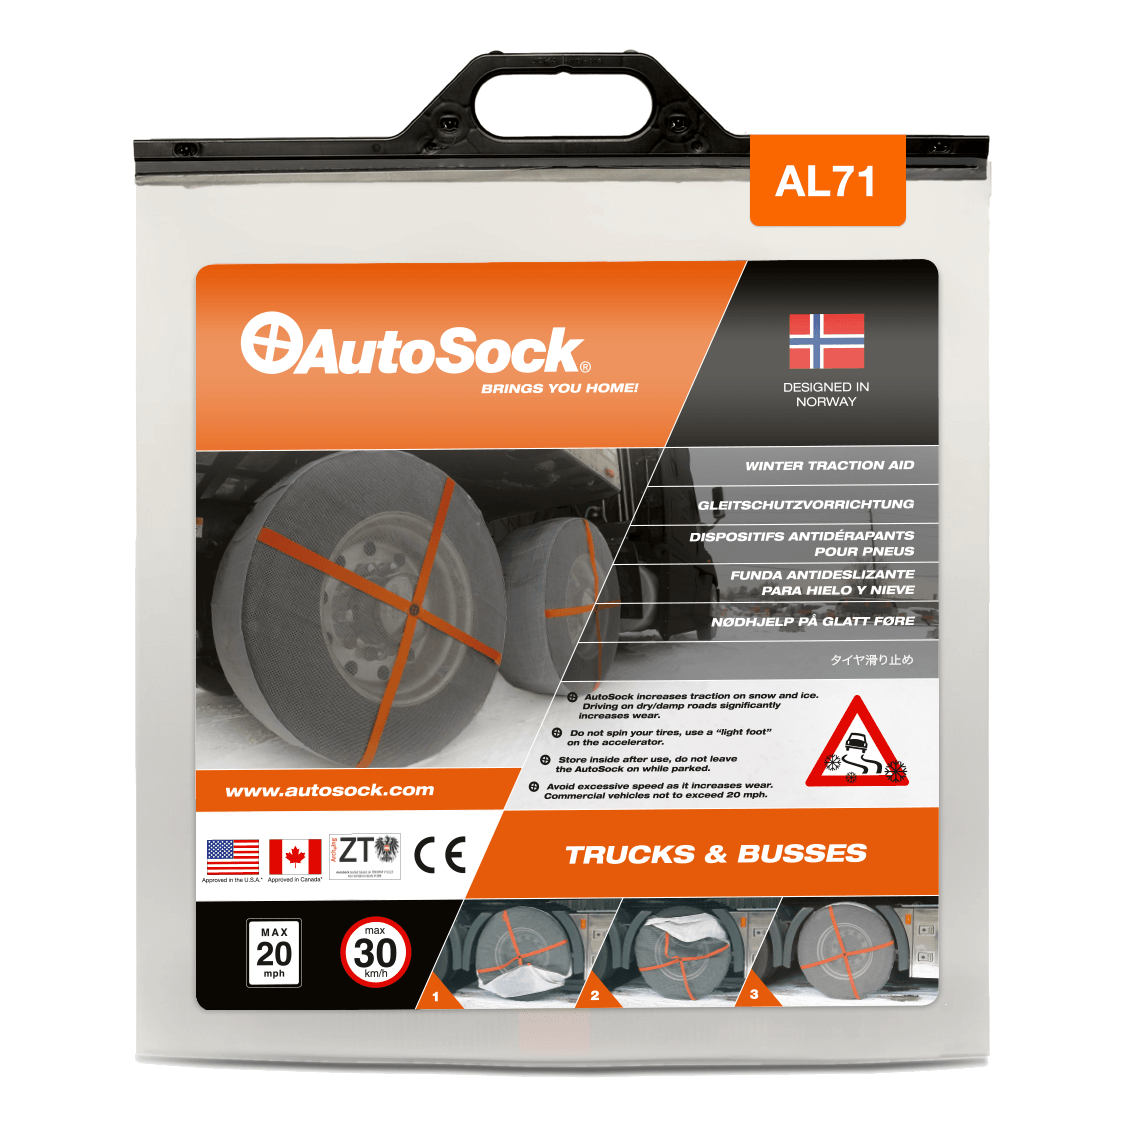 Embalaje del producto AutoSock AL 71 AL71 para camiones (vista frontal)